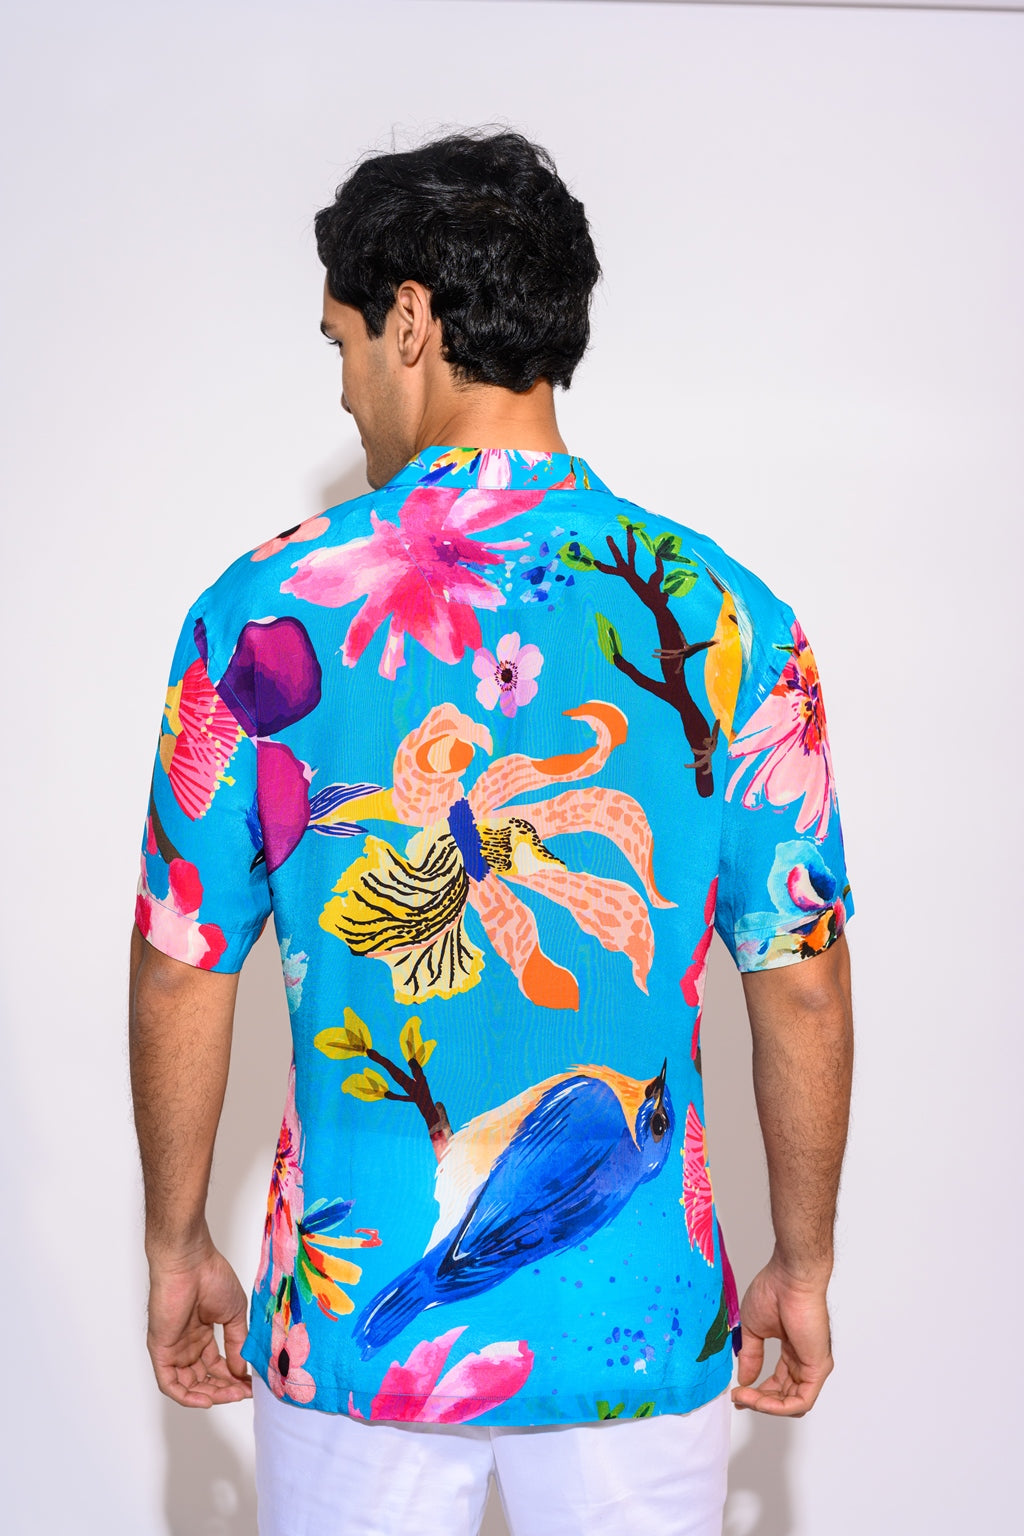 Our Aqua Print Half Sleeve Shirt